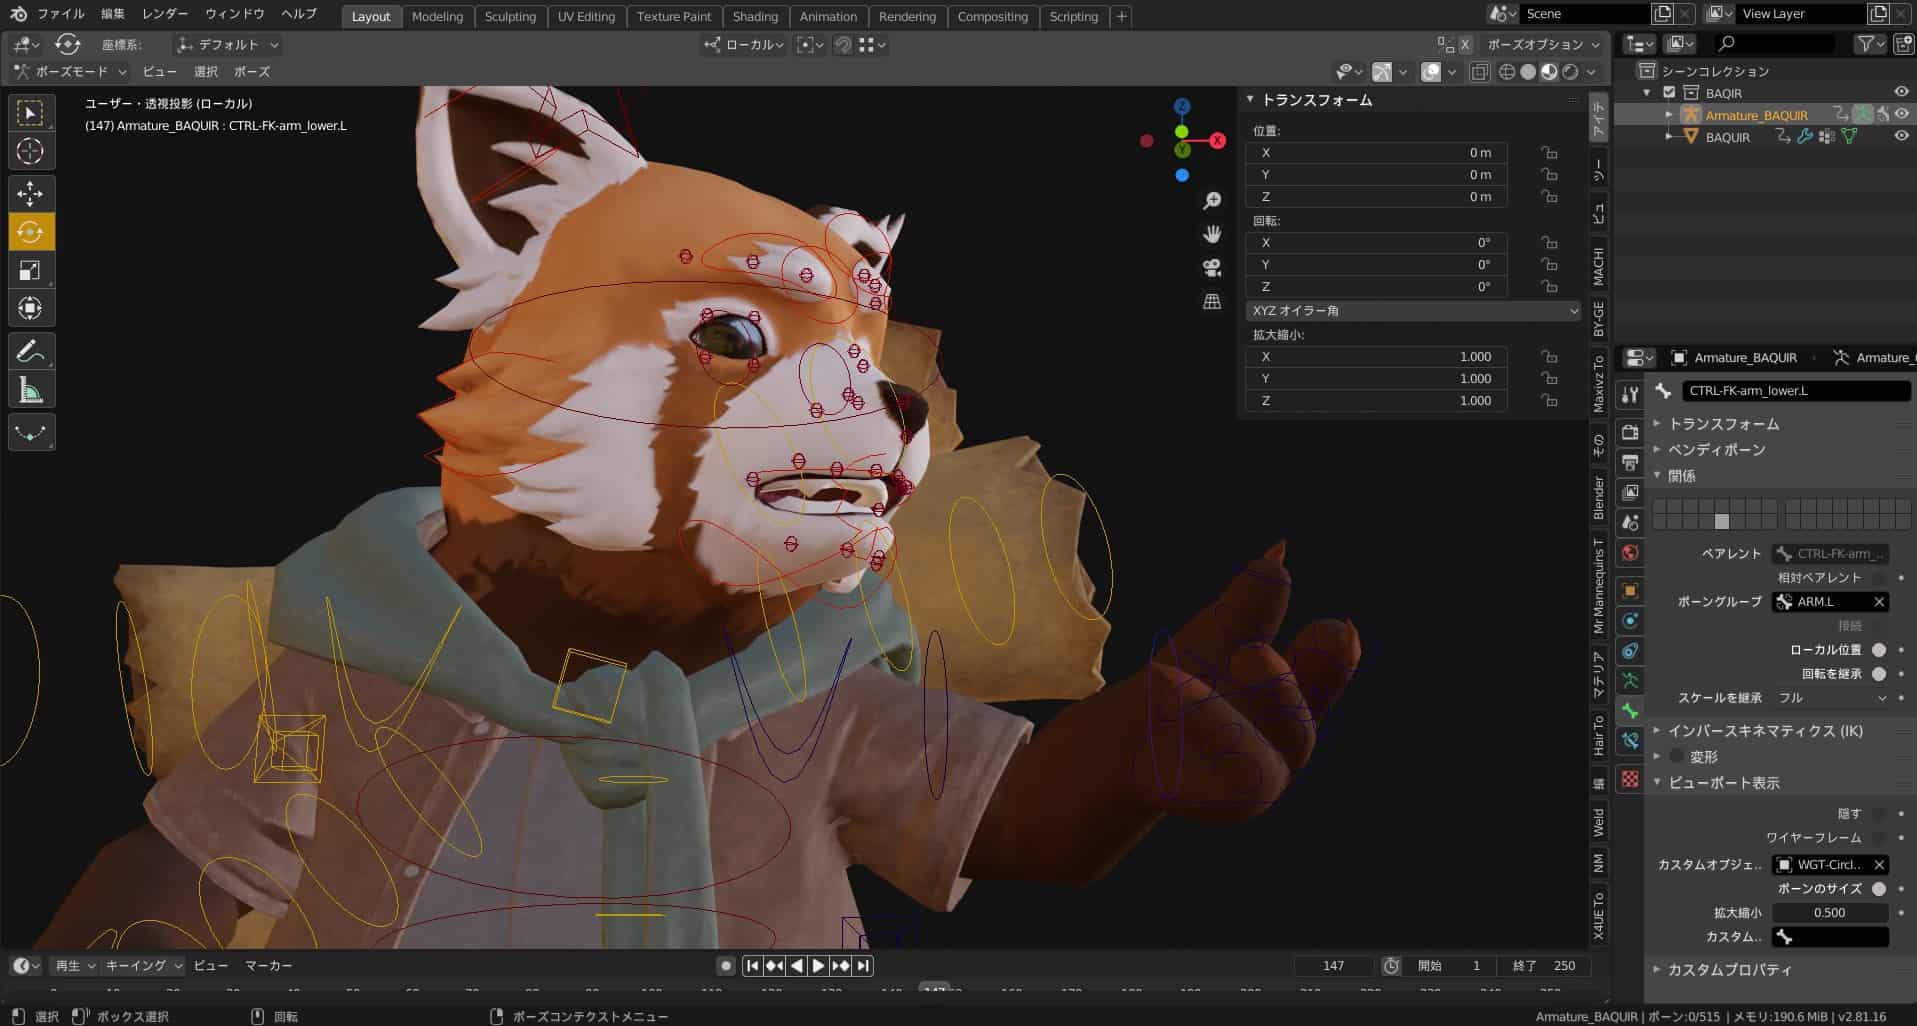 Baqir Rig Blender Version オンラインアニメーションスクール Animation Sherpa の無料配布リグ付きモデル Blender版がリリース